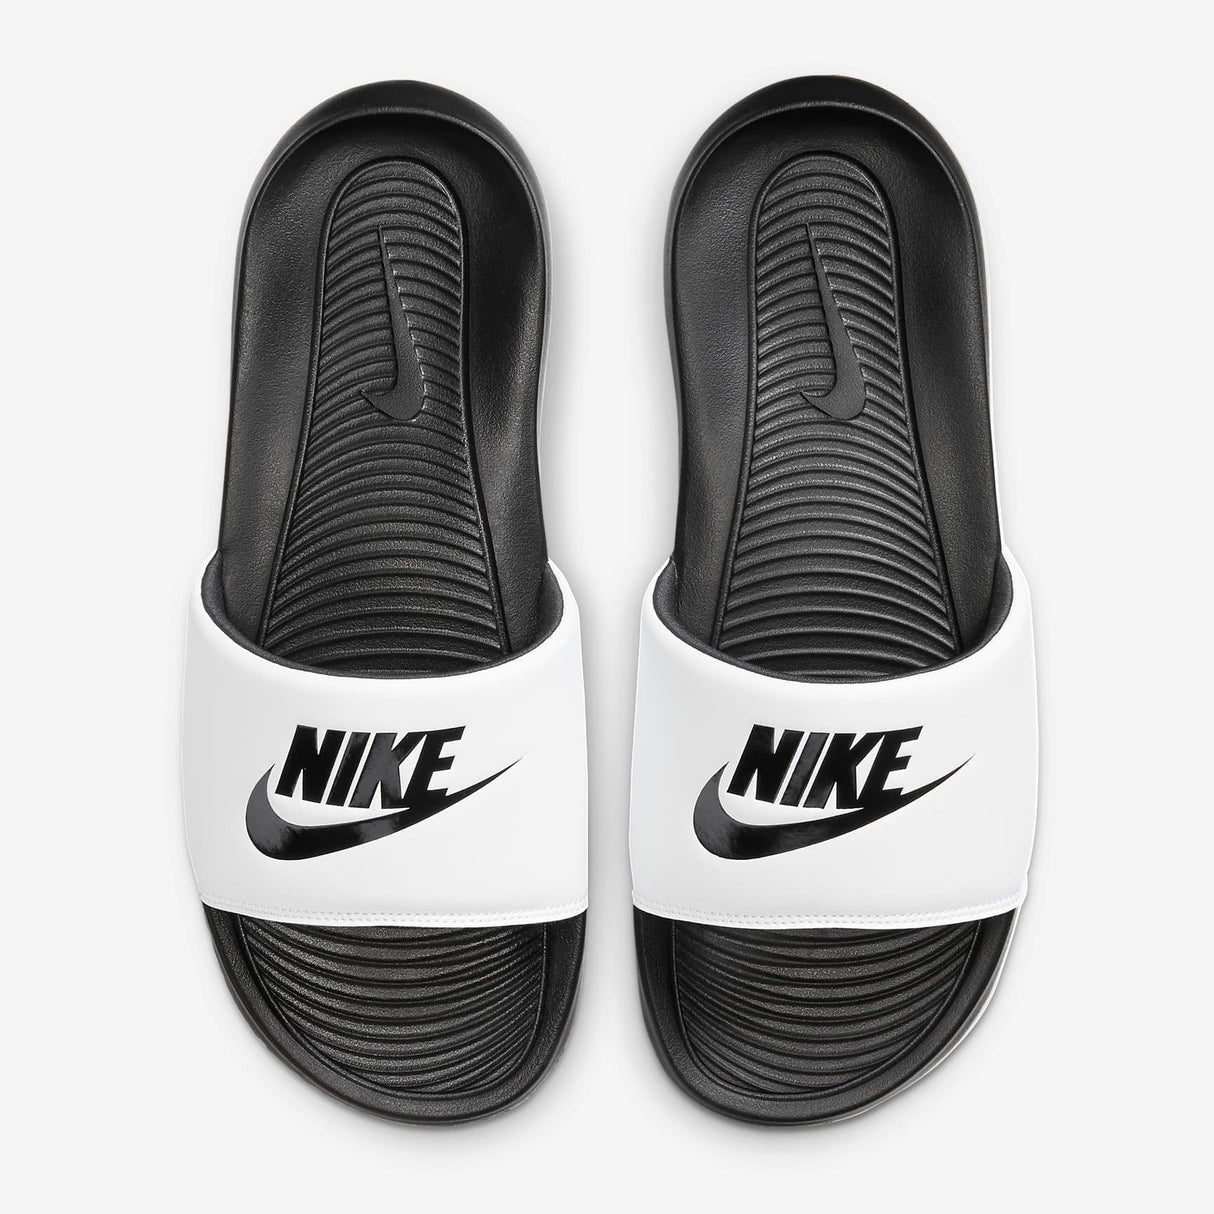 Nike Victori One Slides in Black/White/Black